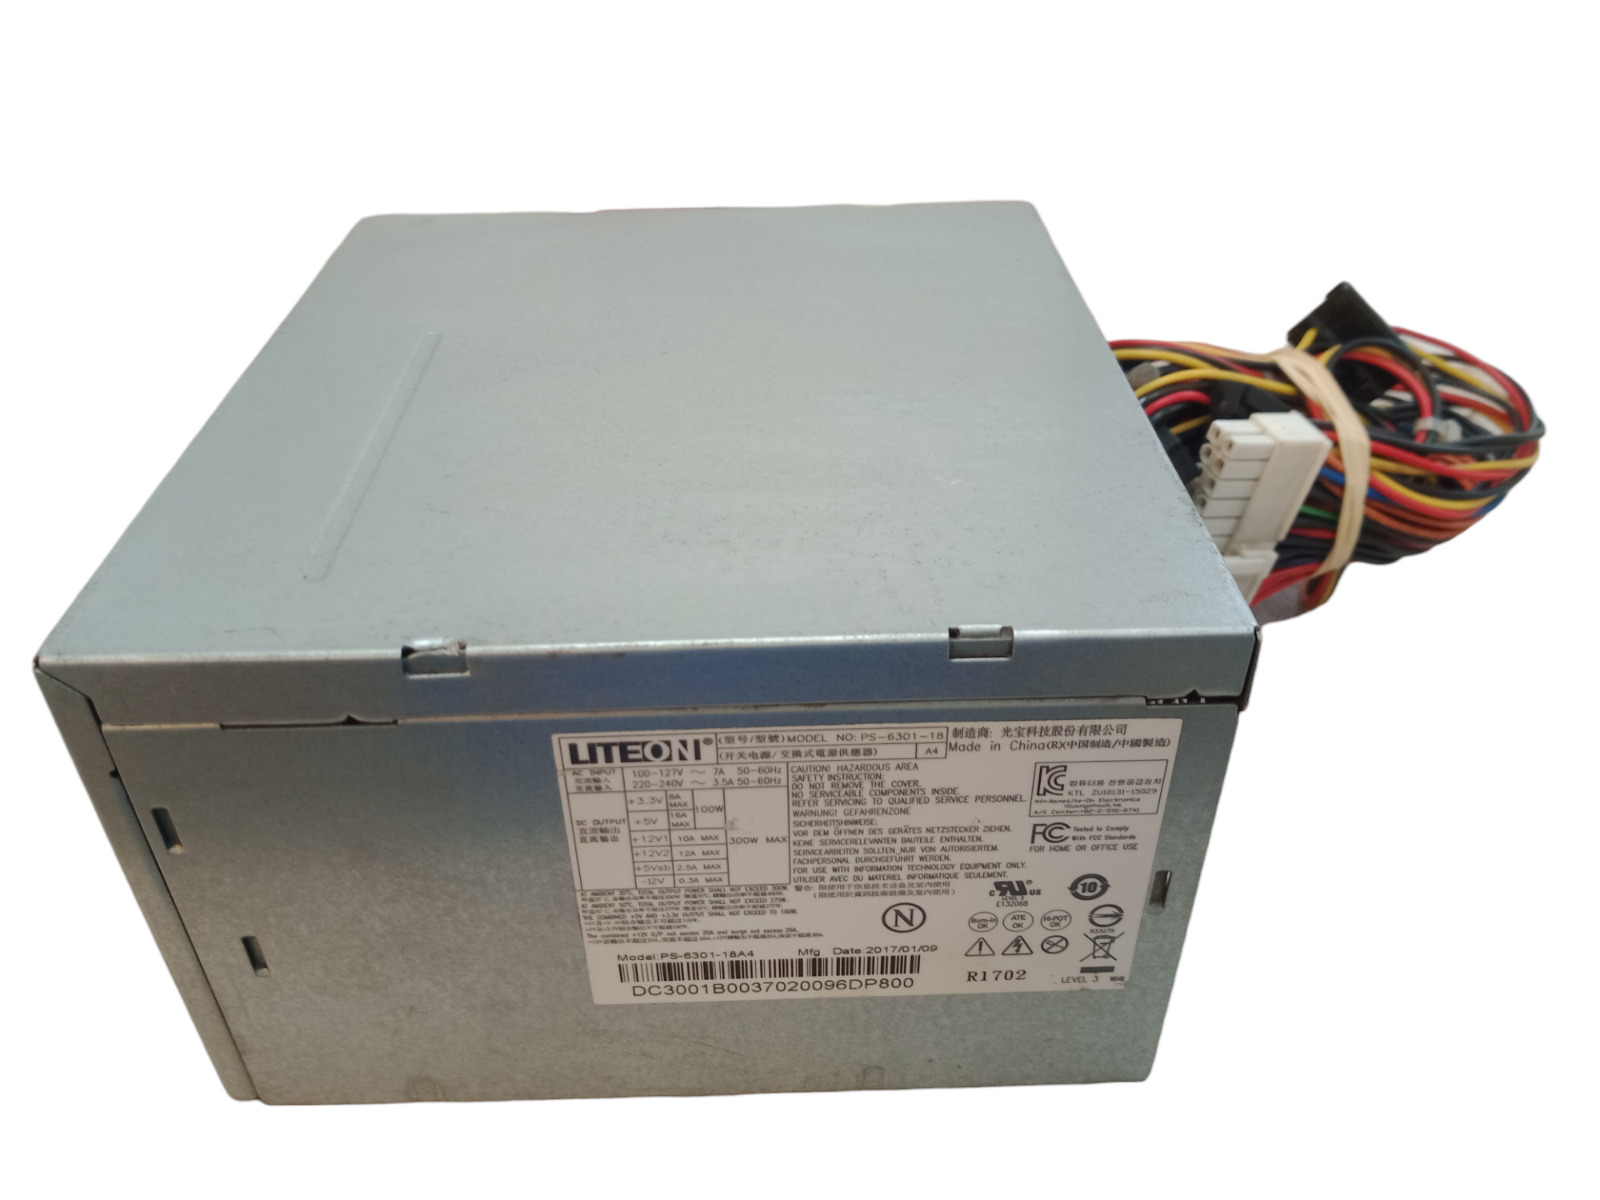 Lite-On PS-6301-18A4 300W ATX Acer Aspire Desktop Power Supply (PSU) | It Works